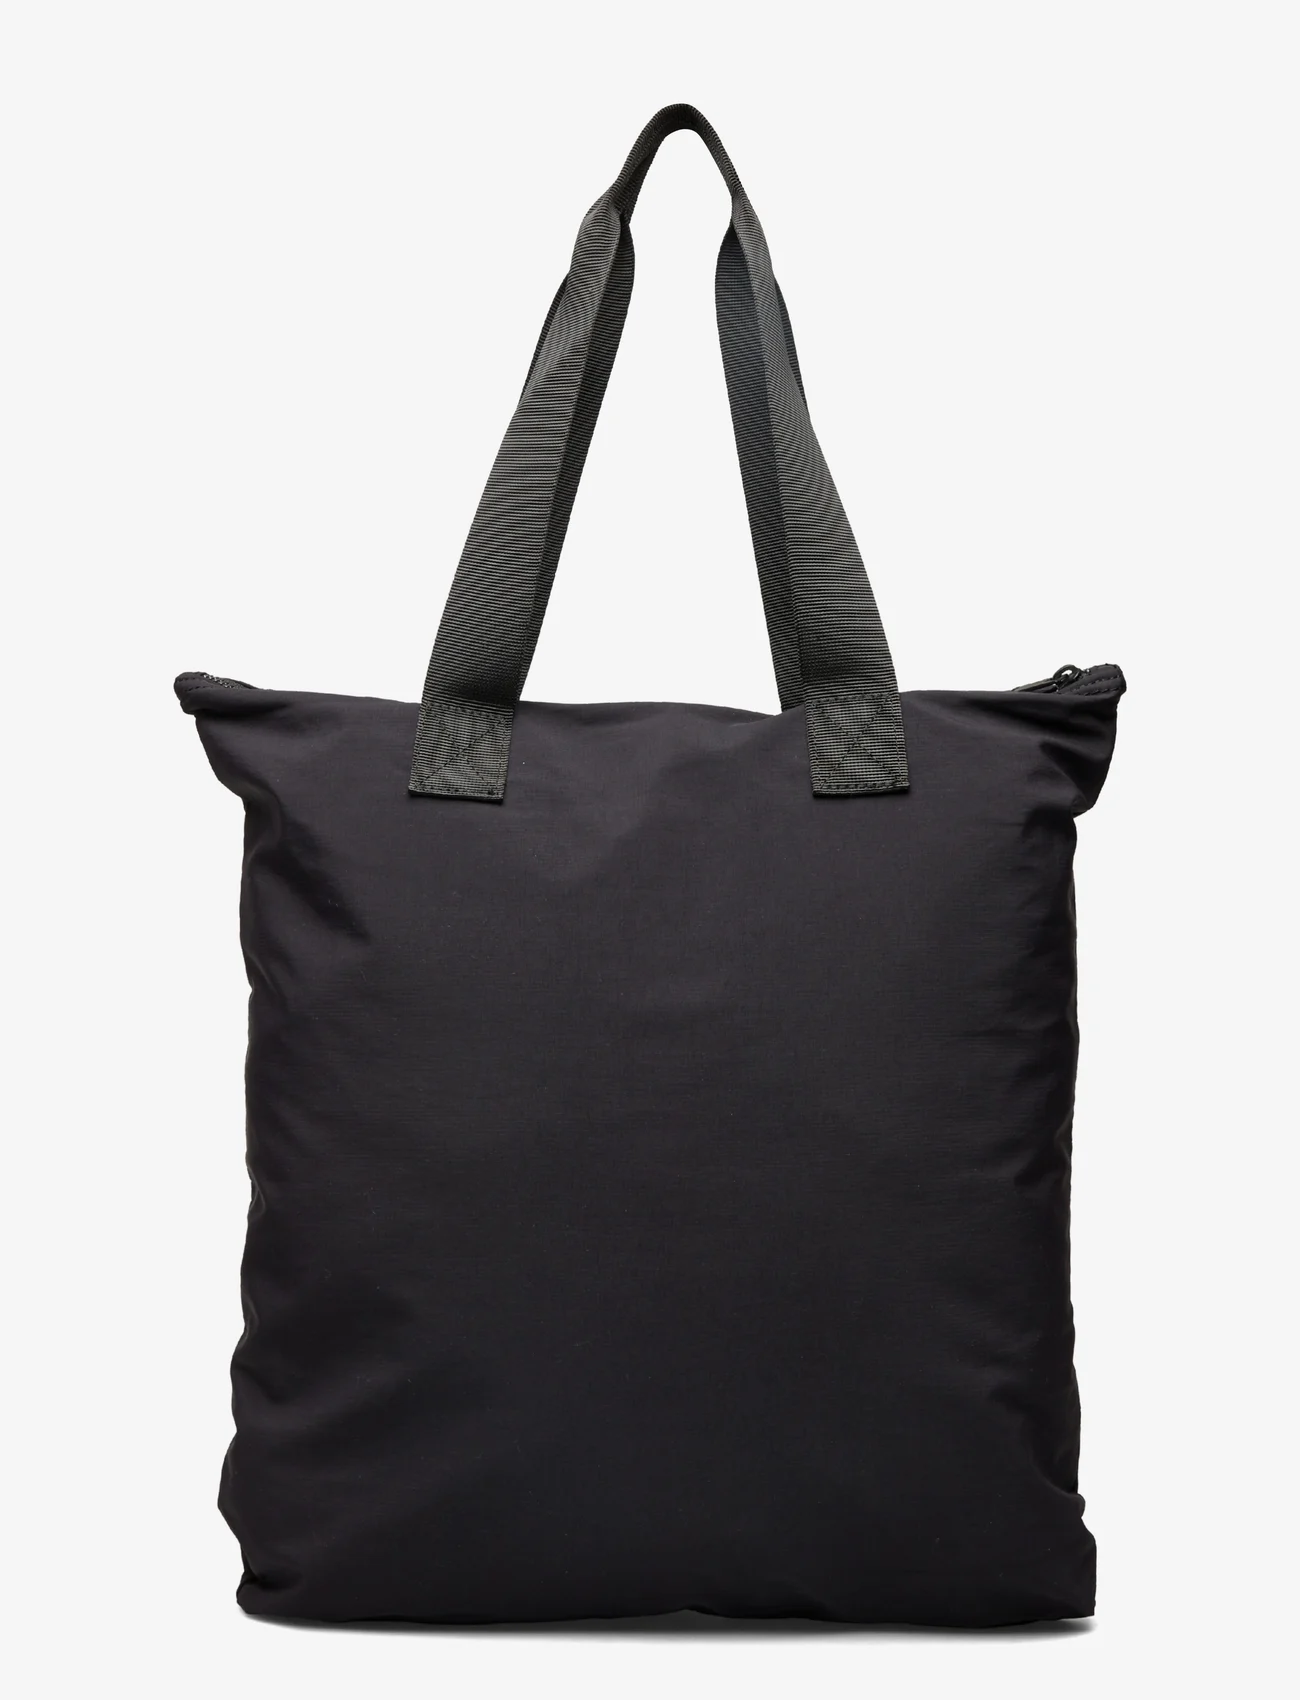 Garment Project - Logo Tote Bag - Black - tote bags - black - 1